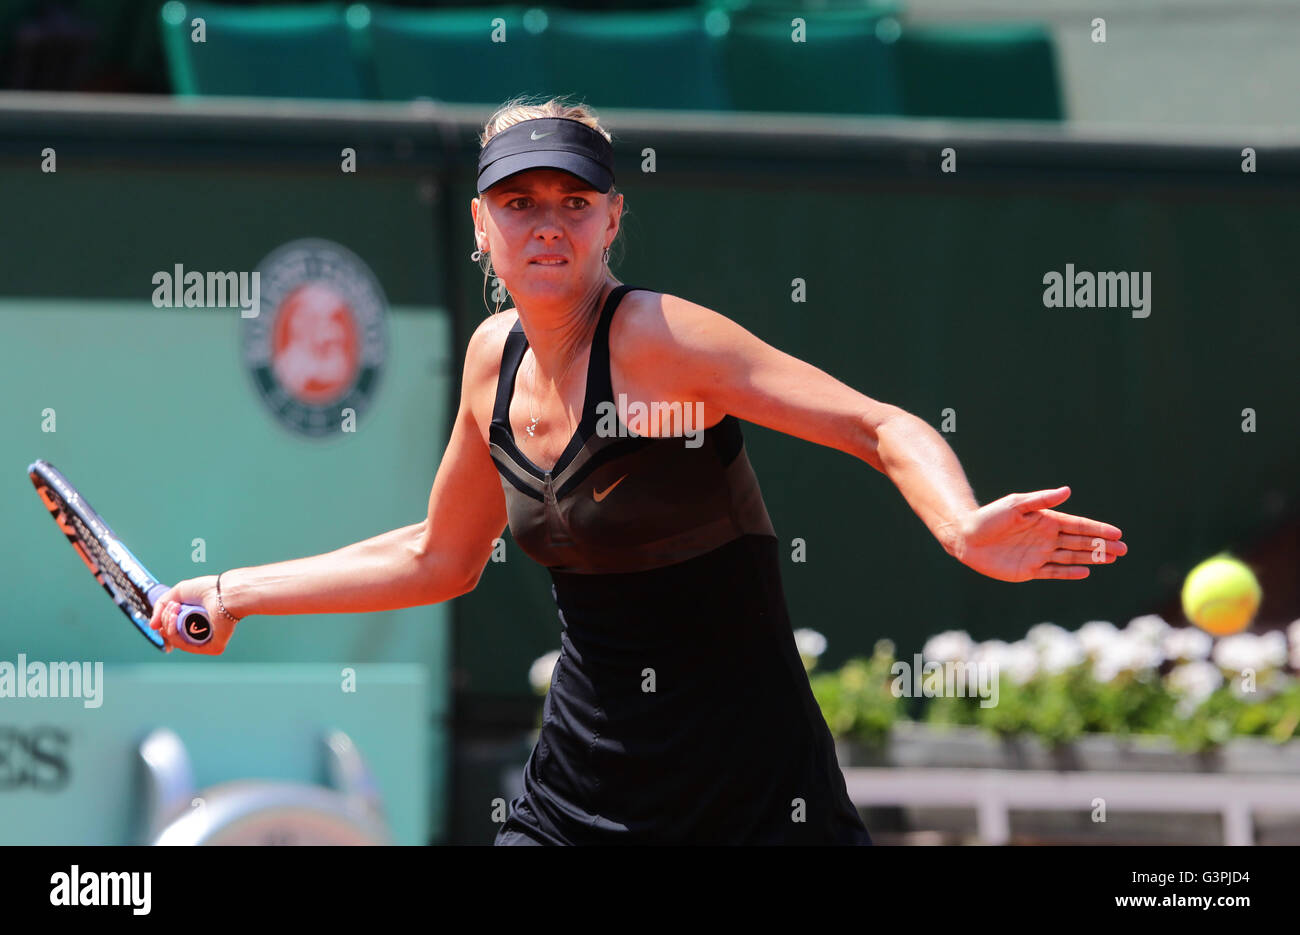 Maria Sharapova, RUS, Open de France 2012, tournoi du Grand Chelem de tennis de l'ITF, Roland Garros, Paris, France, Europe Banque D'Images